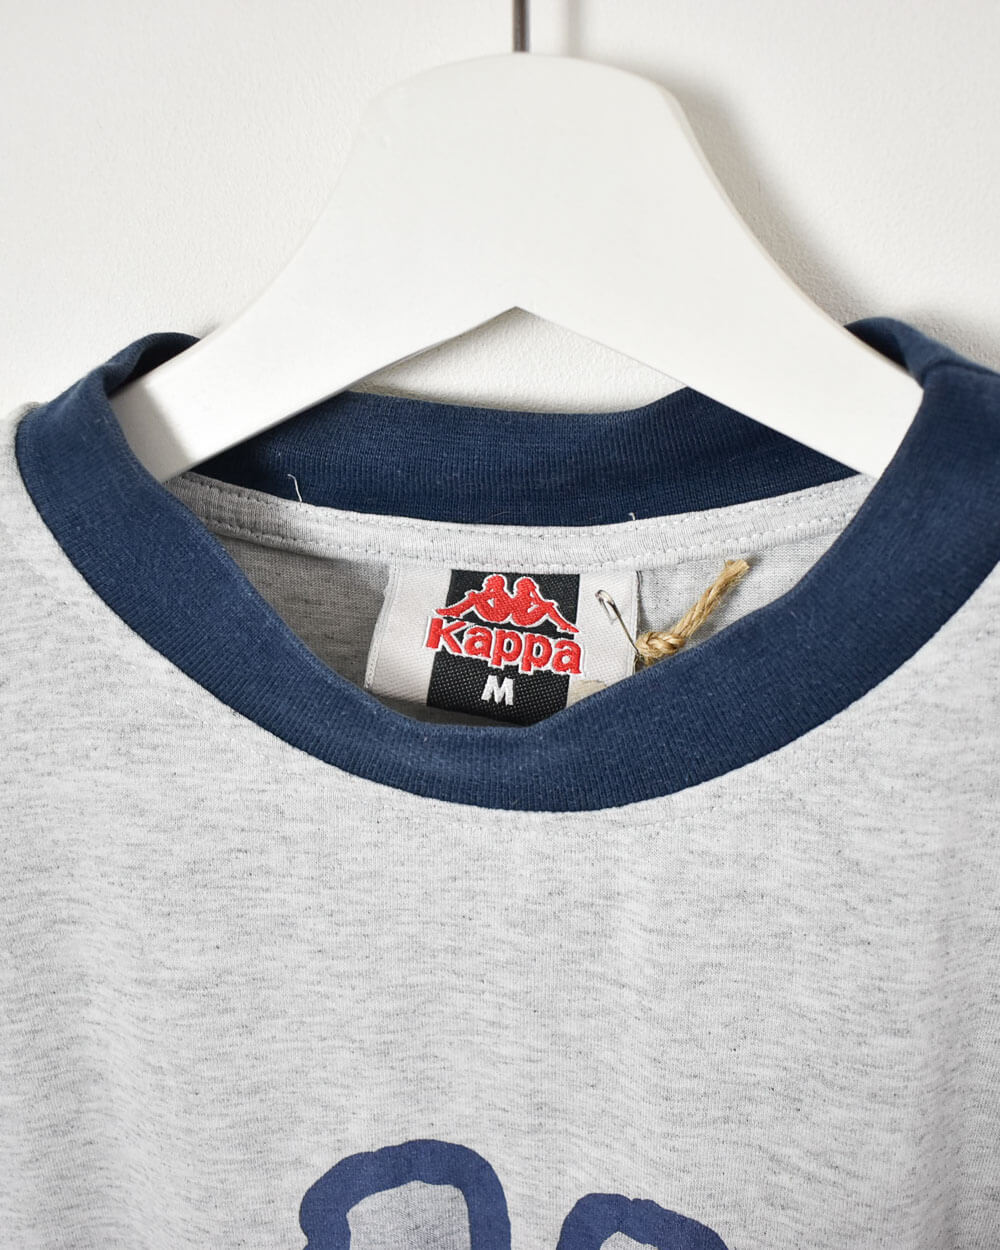 Kappa T-Shirt - Medium - Domno Vintage 90s, 80s, 00s Retro and Vintage Clothing 